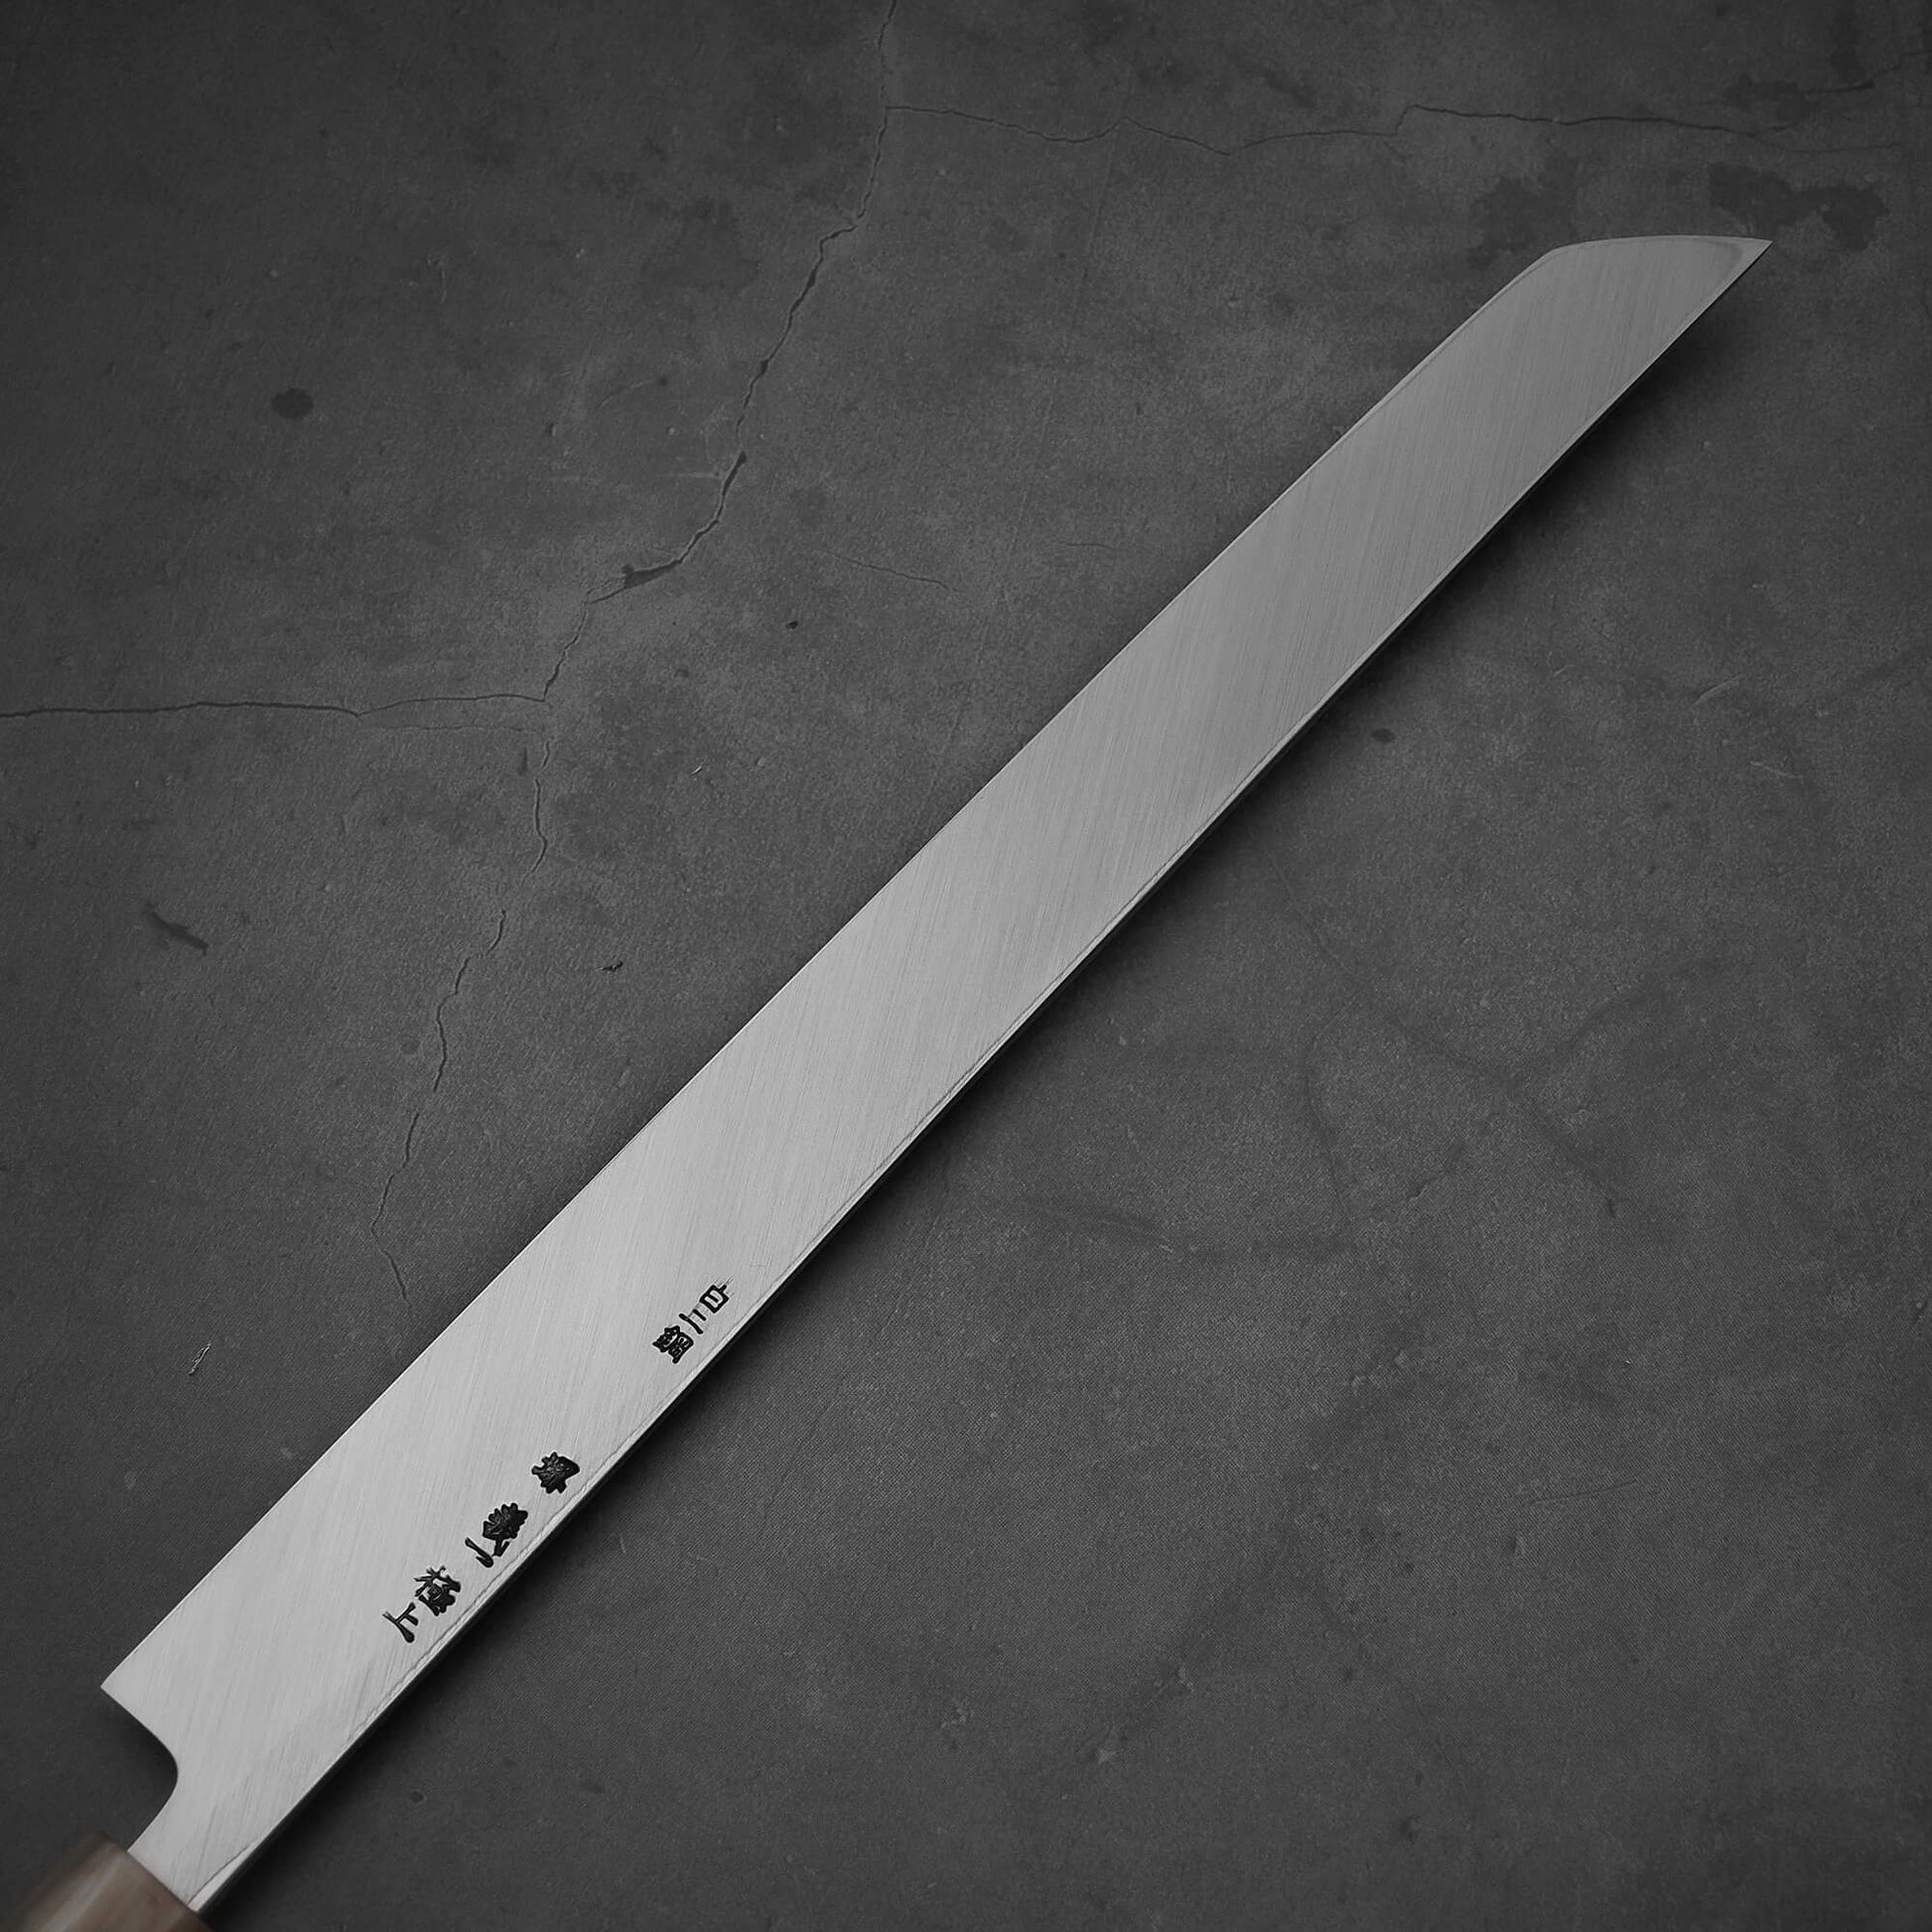 Close up view of the Yoshikazu Tanaka 300mm sakimaru takohiki knife with a hand-forged blade made of shirogami#2 steel. Image shows back side of the knife